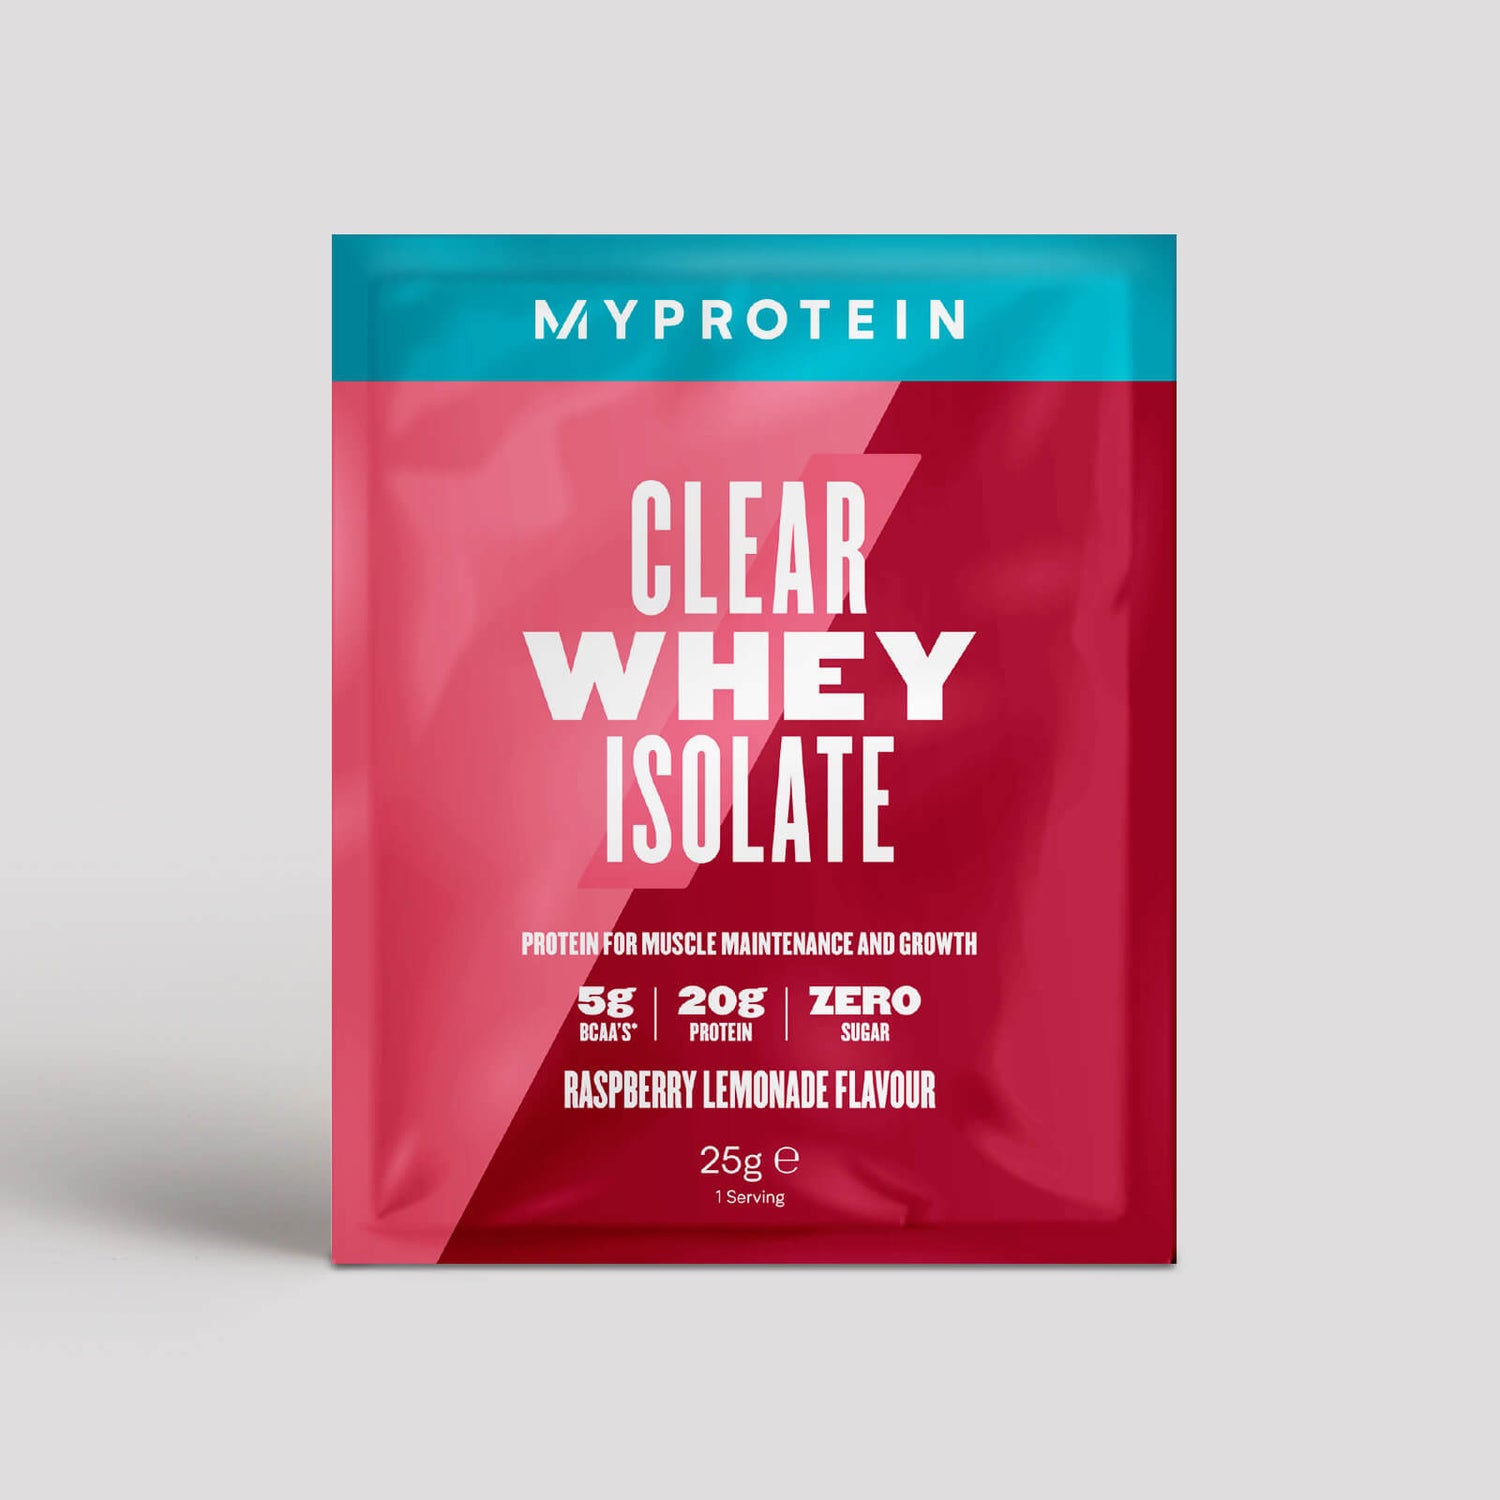 Myprotein Clear Whey Isolate (Sample) - 1servings - Ny - Raspberry Lemonade